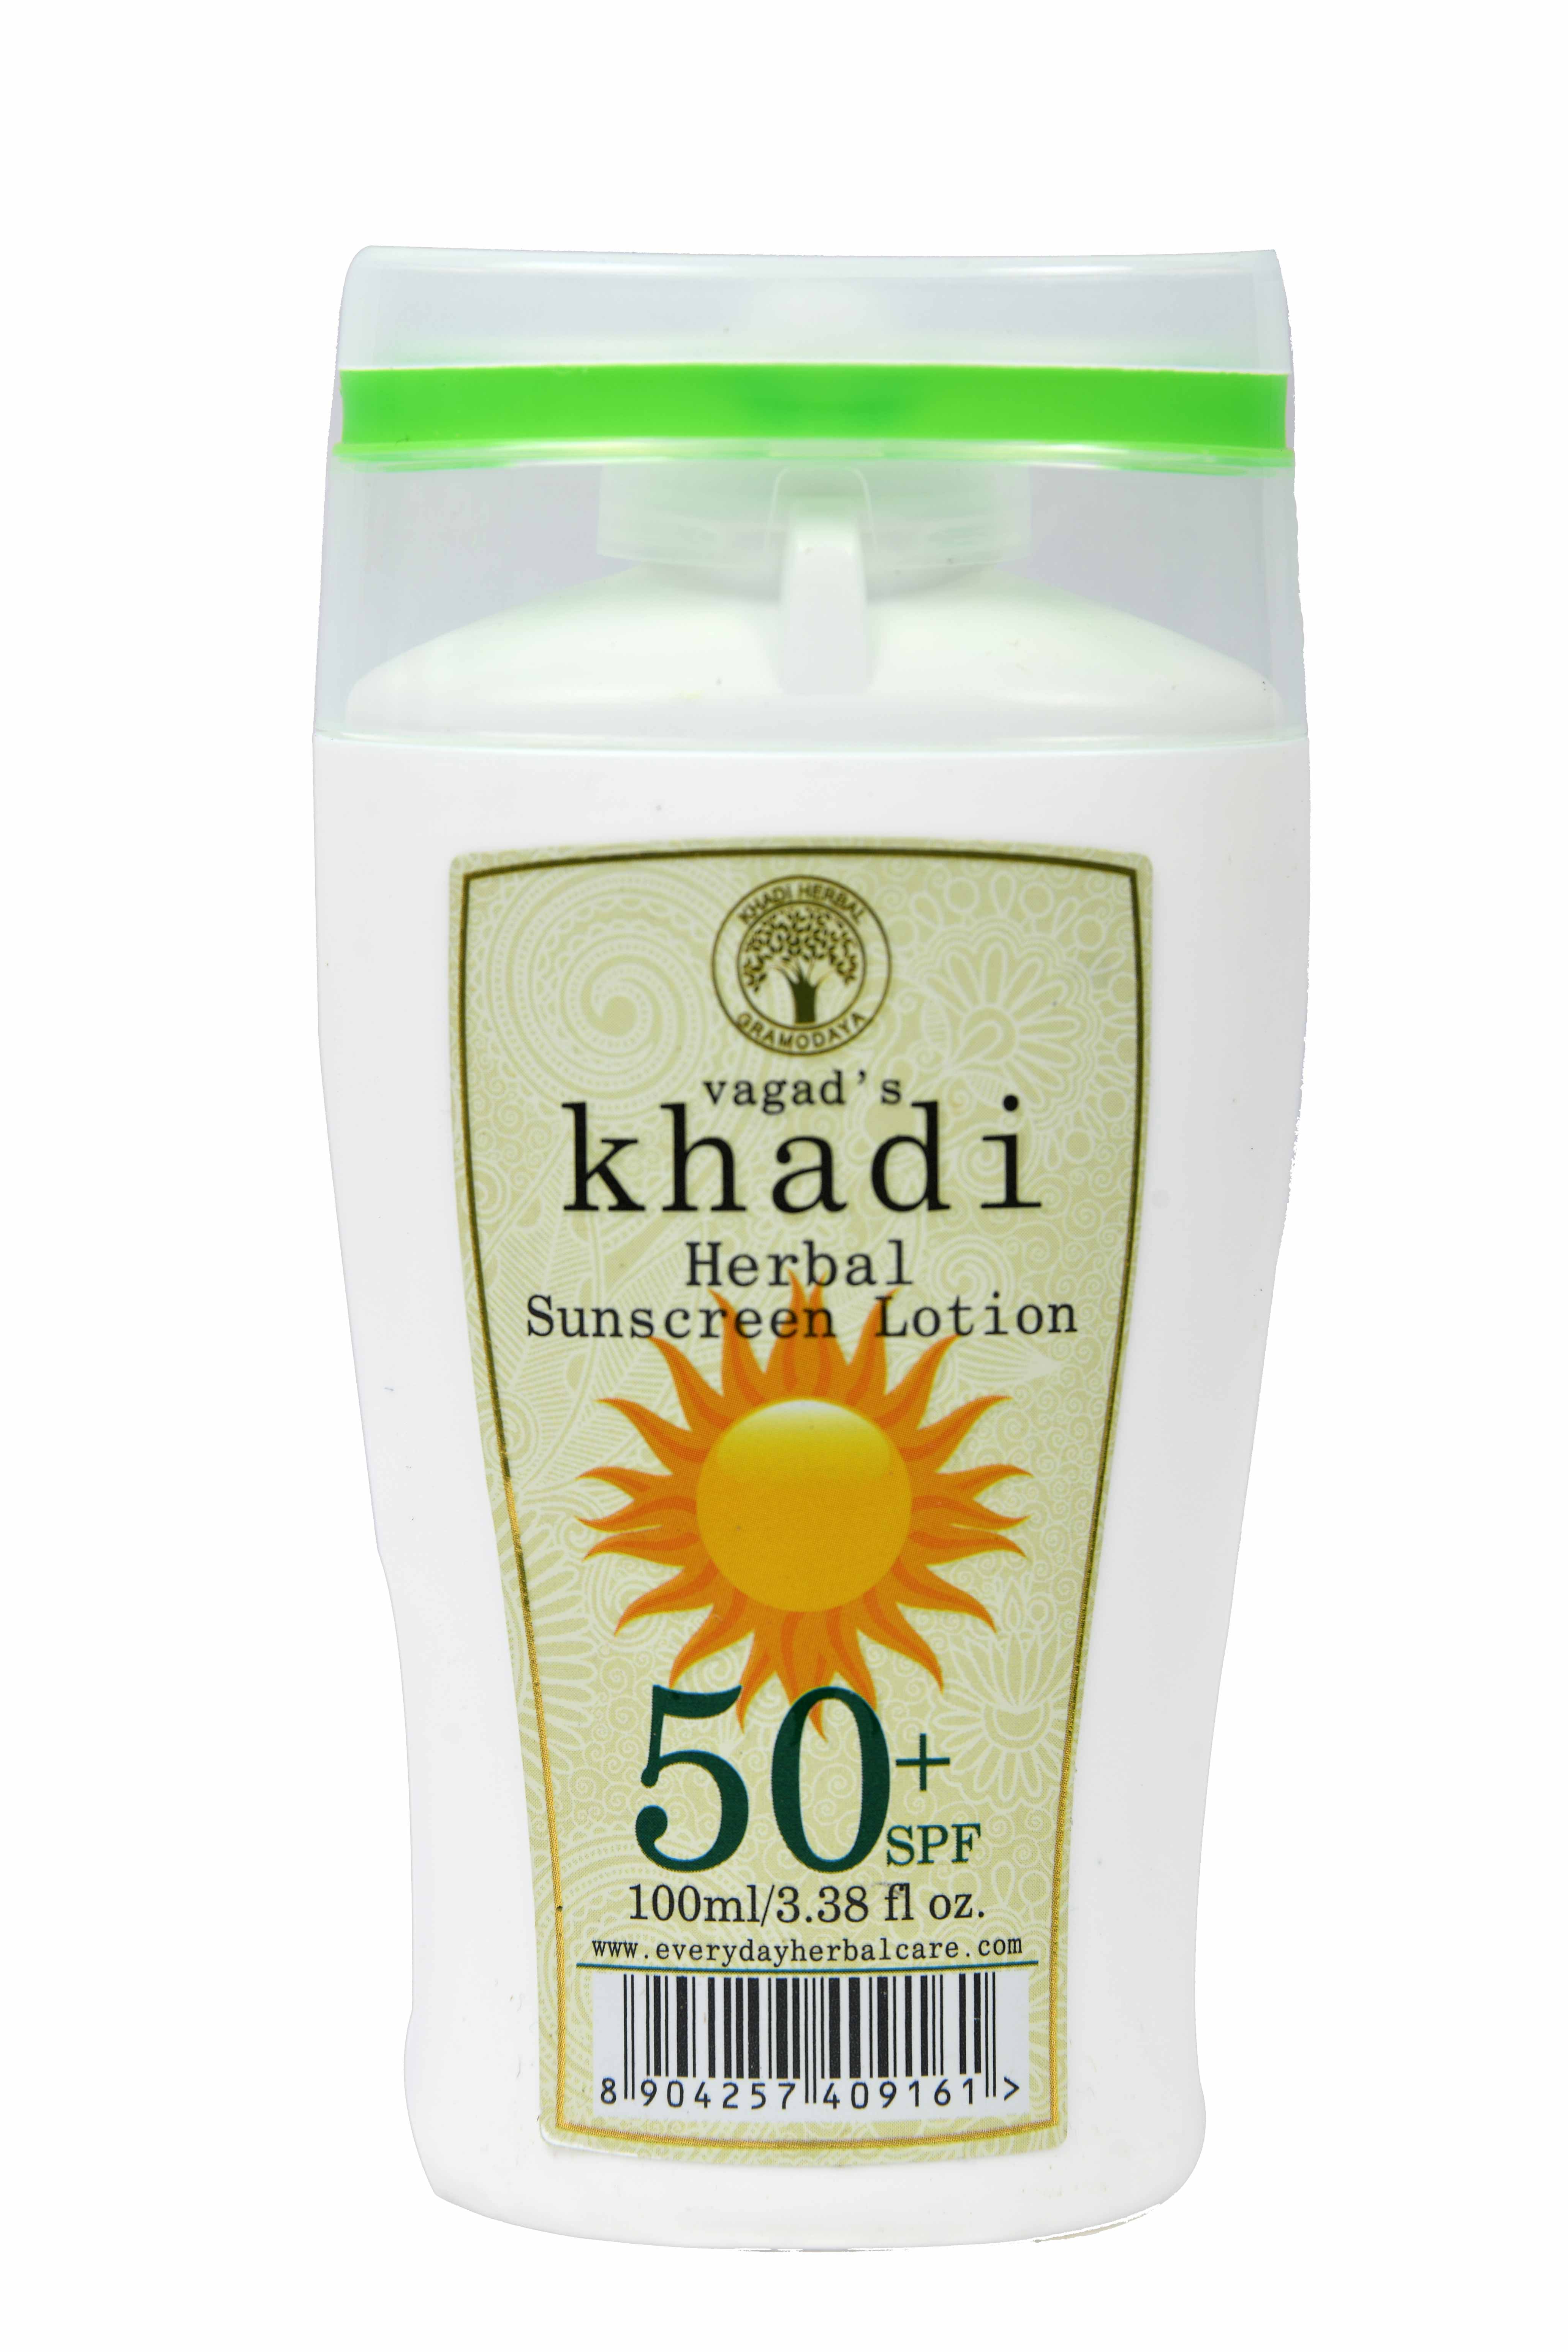 Buy Vagad's Khadi Spf 50 Sunscreen Lotion at Best Price Online